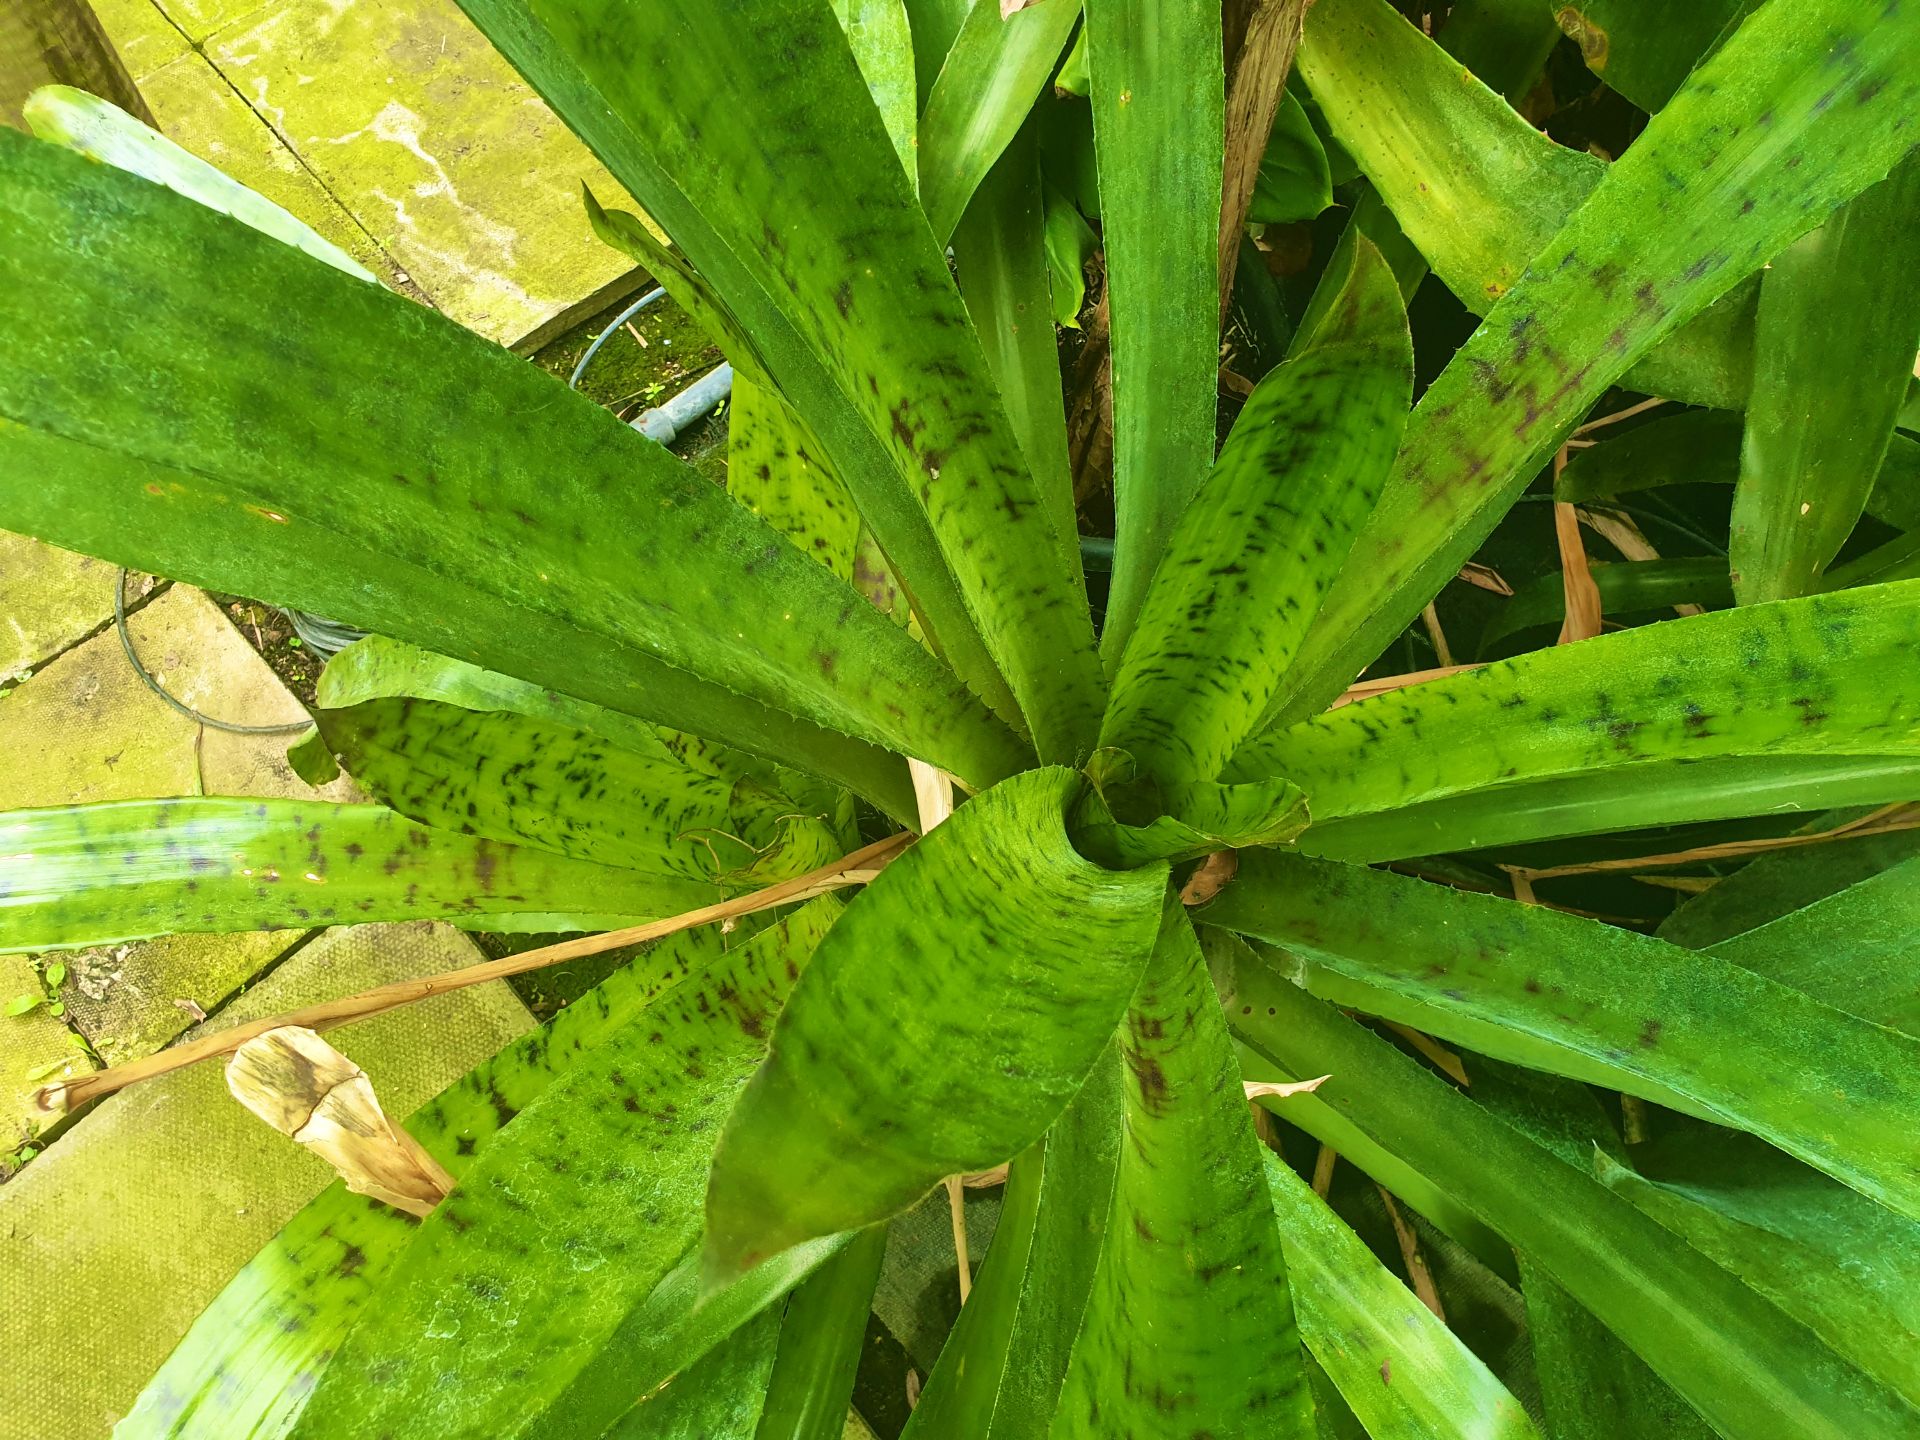 1 Bromeliad - Interesting indoor plant